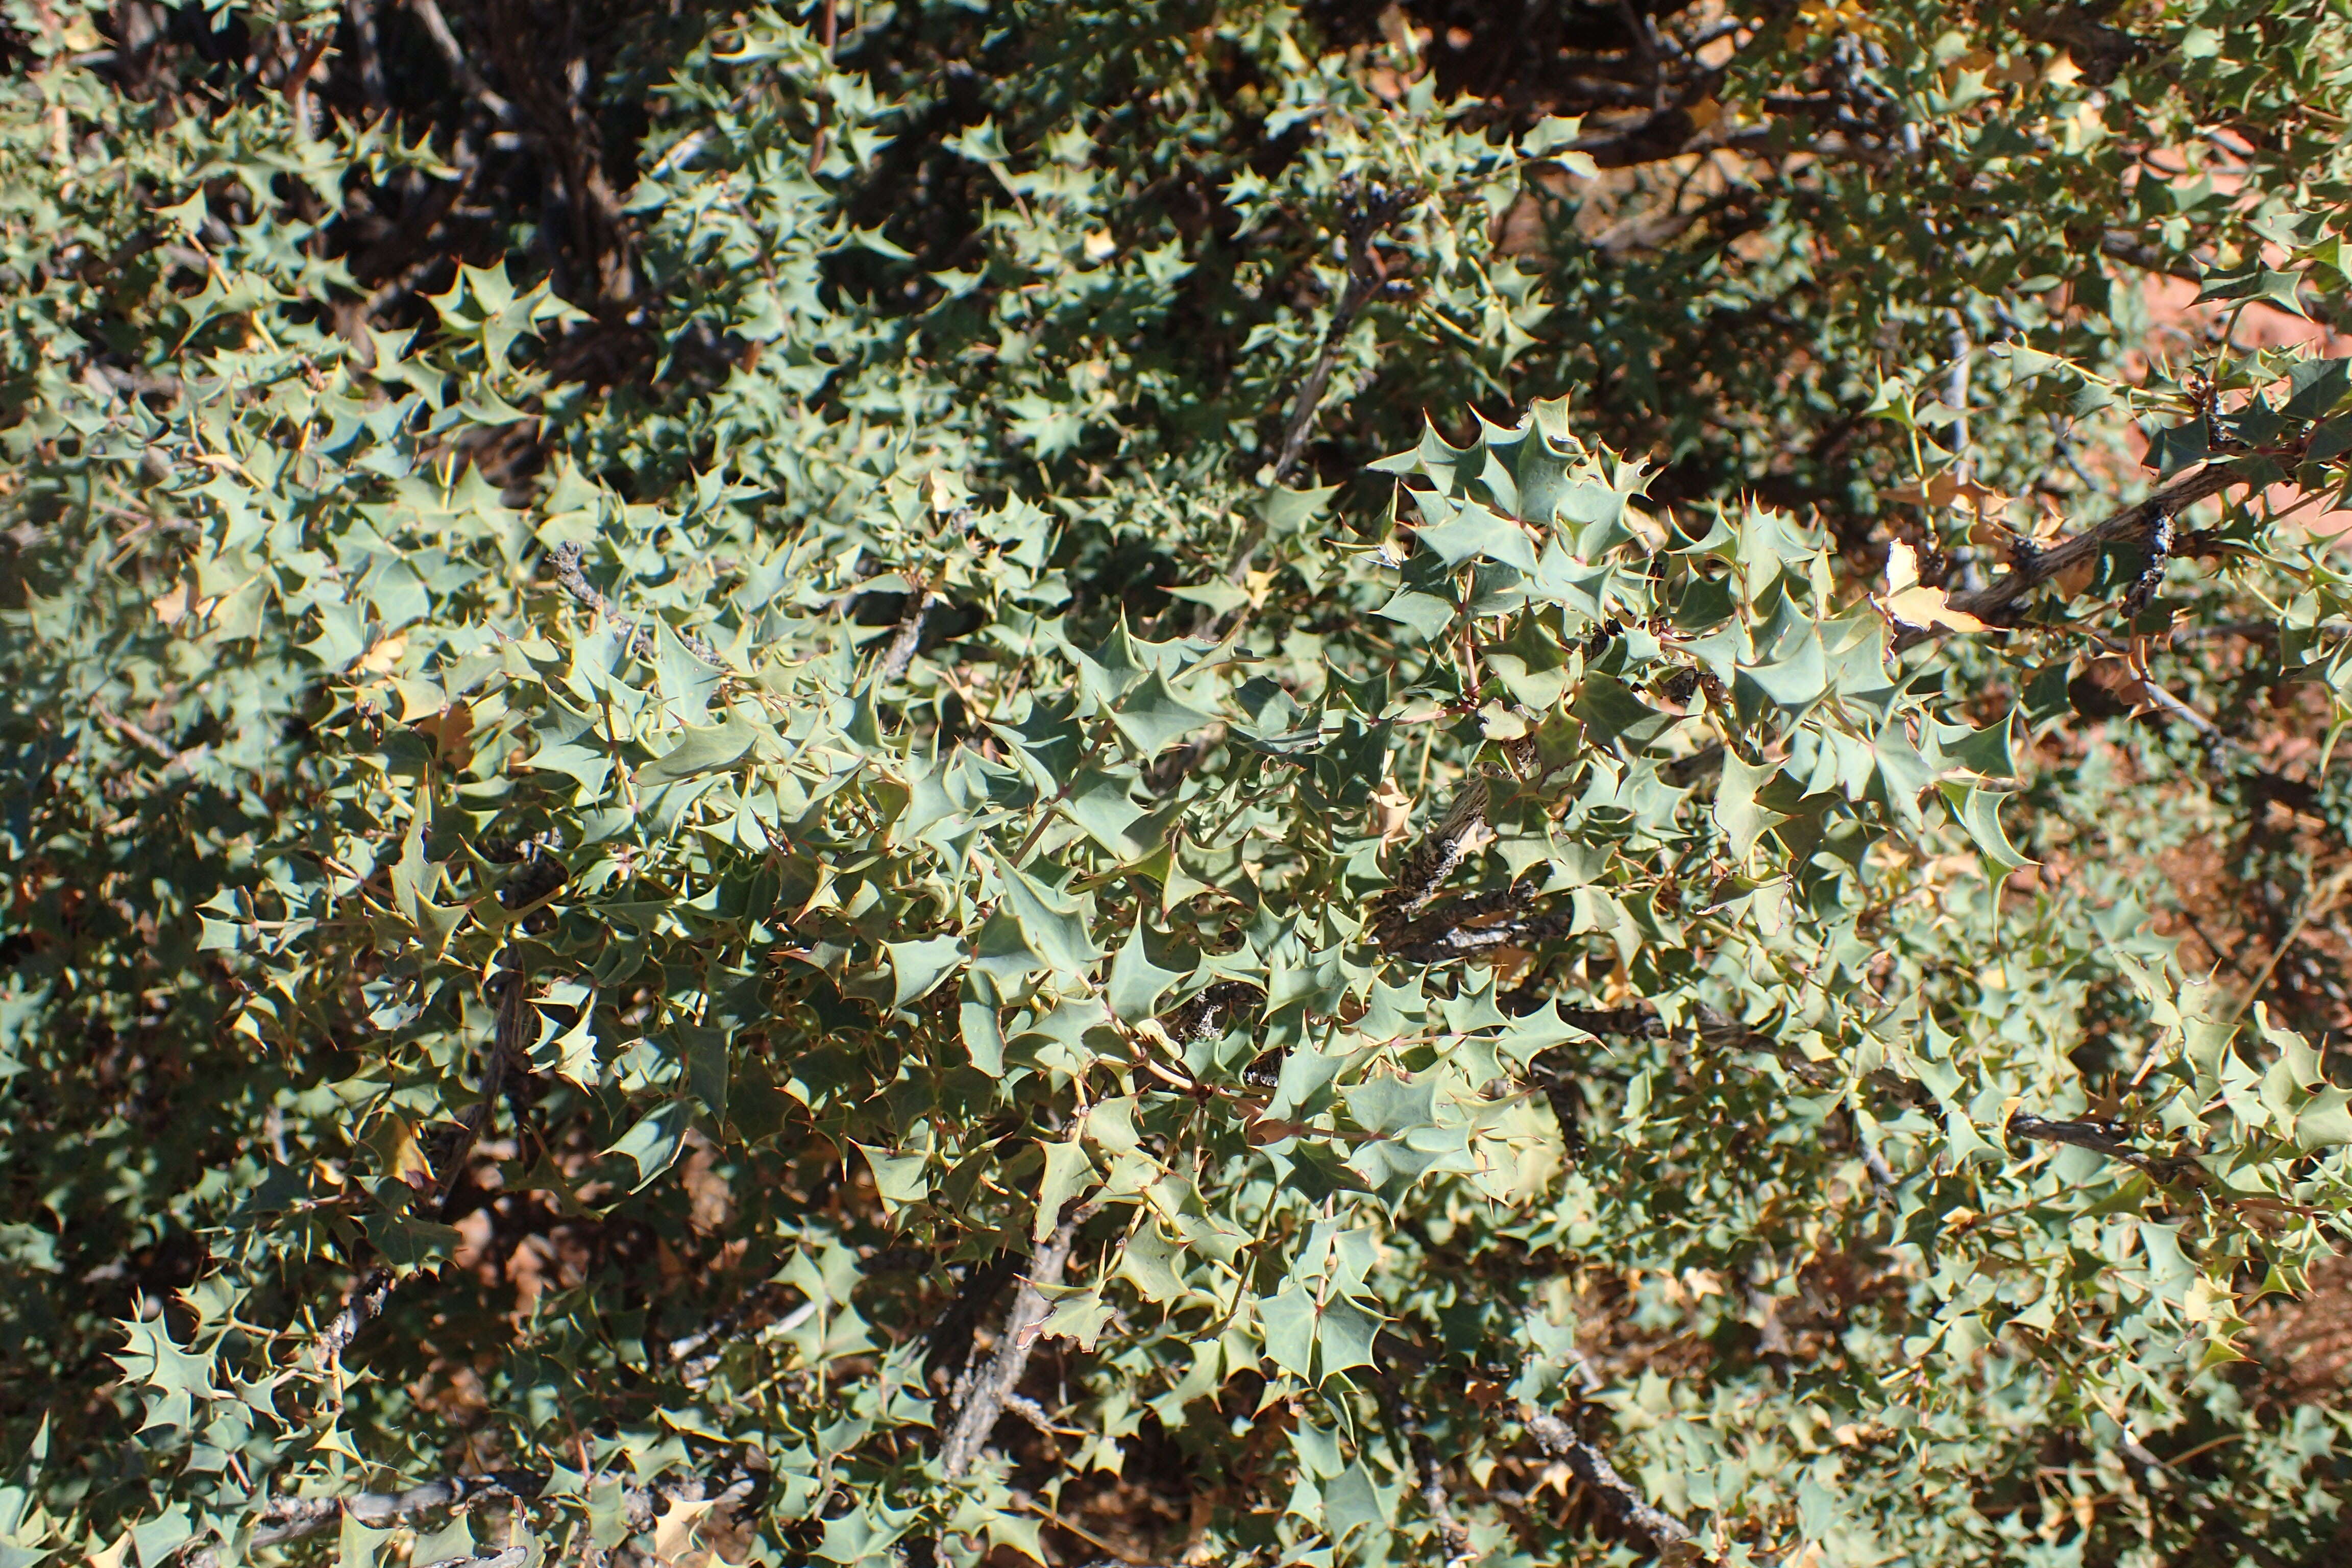 Image of Fremont's mahonia